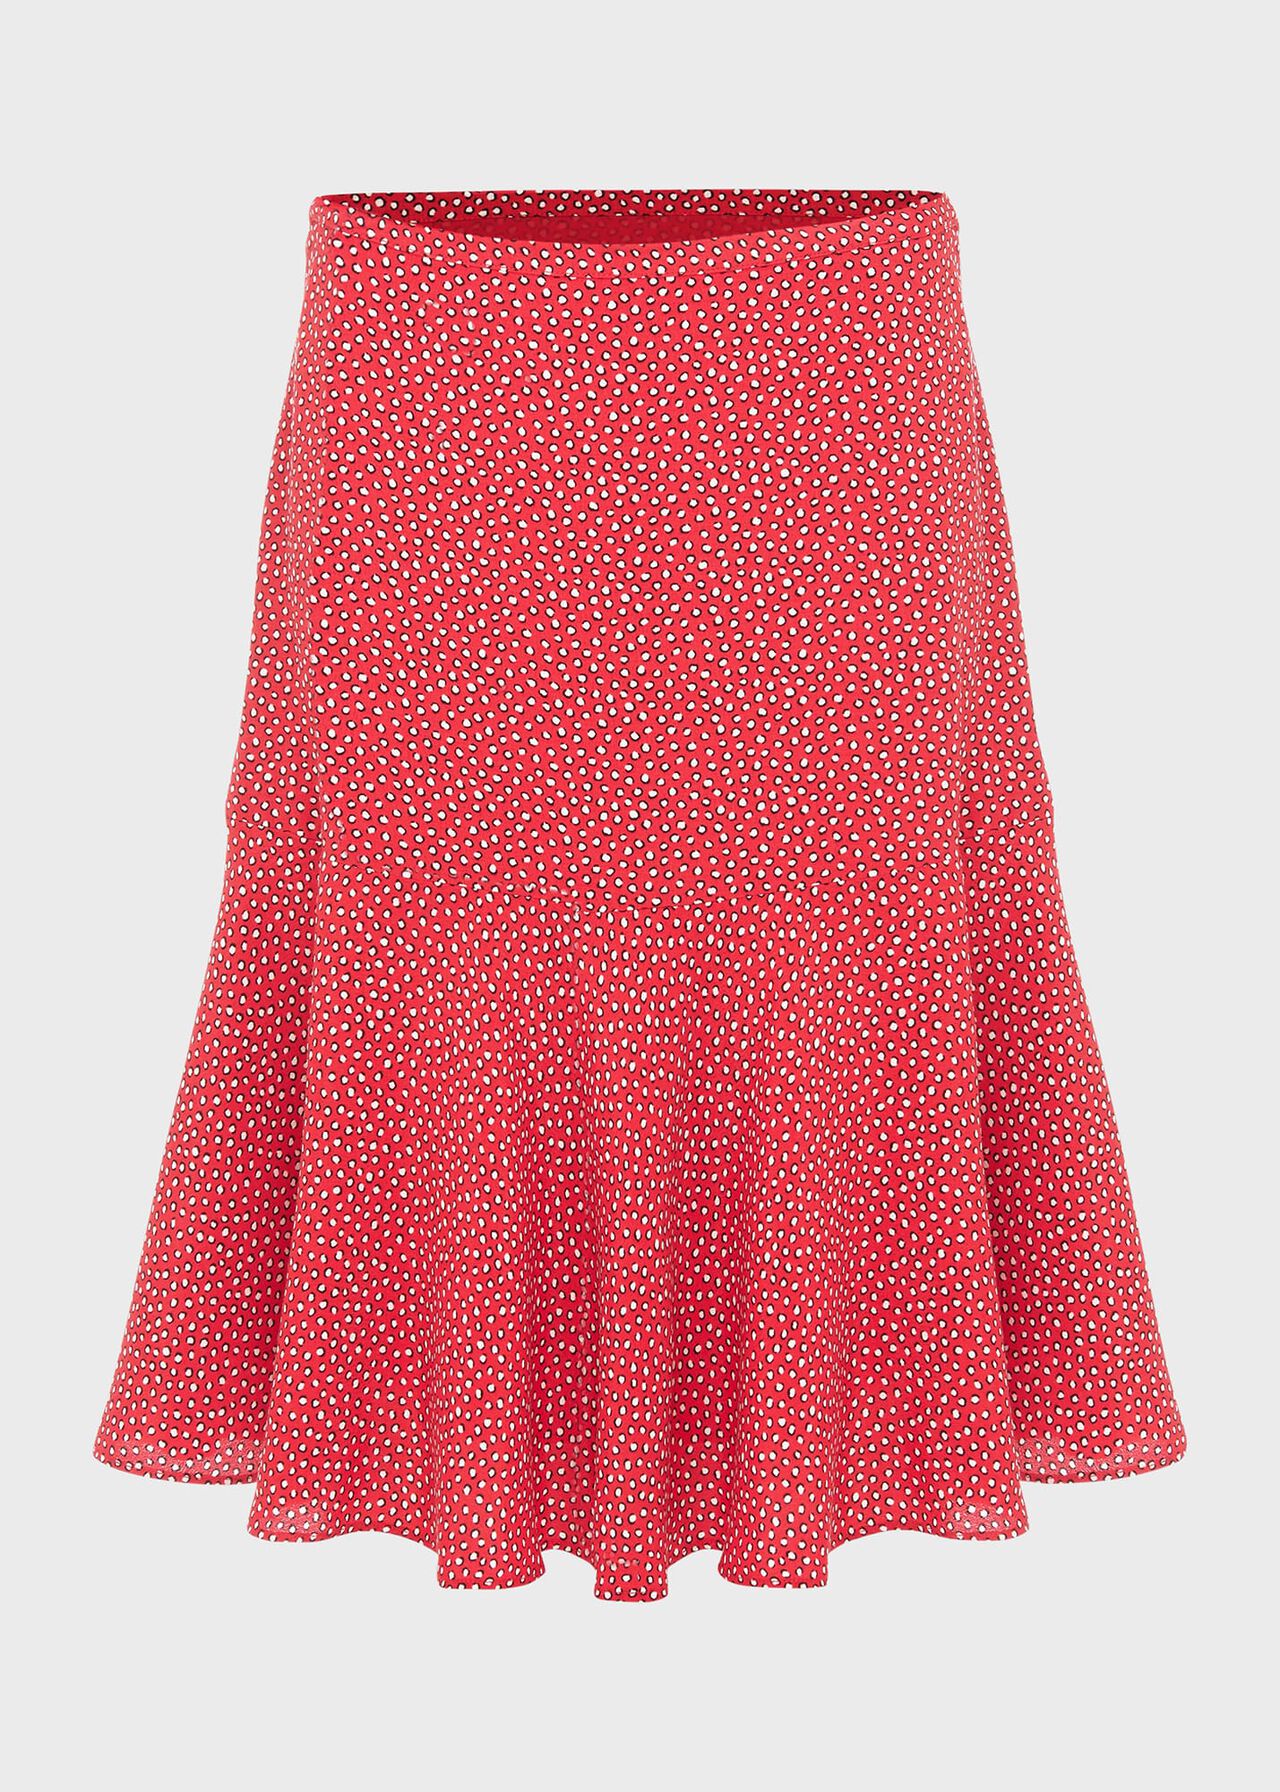 Catalina Printed Skirt, Raspberry Ivory, hi-res